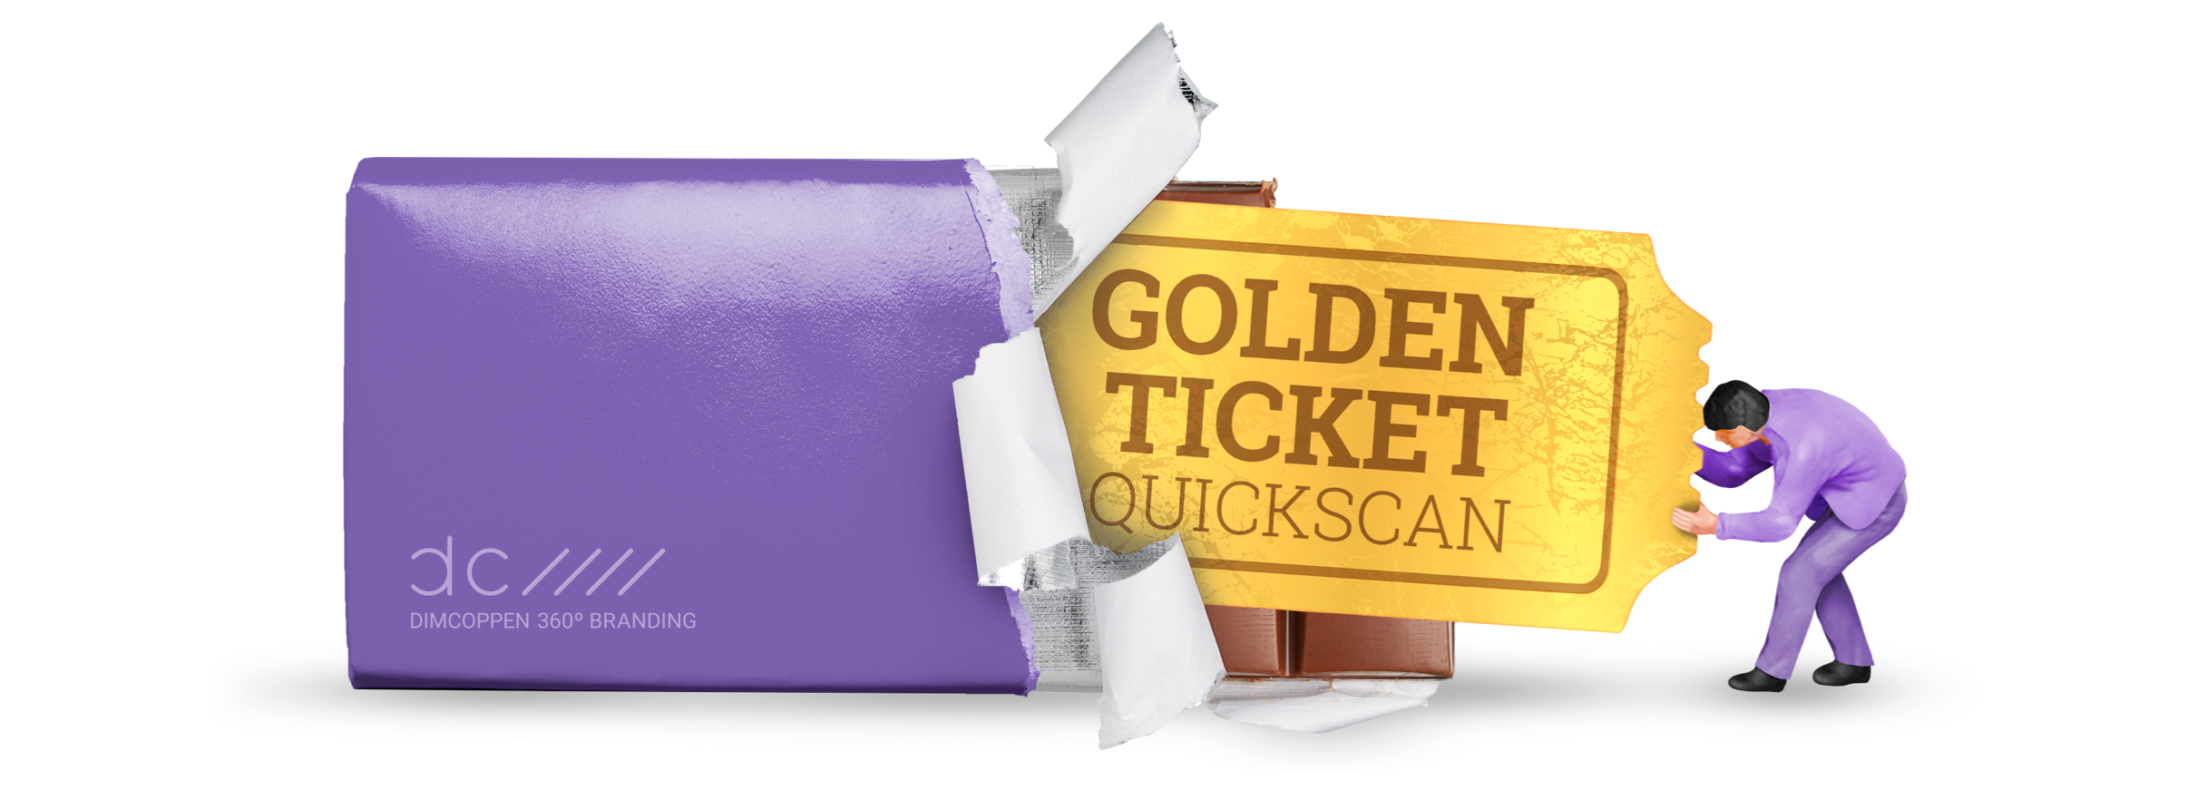 01 Golden Ticket Quickscan